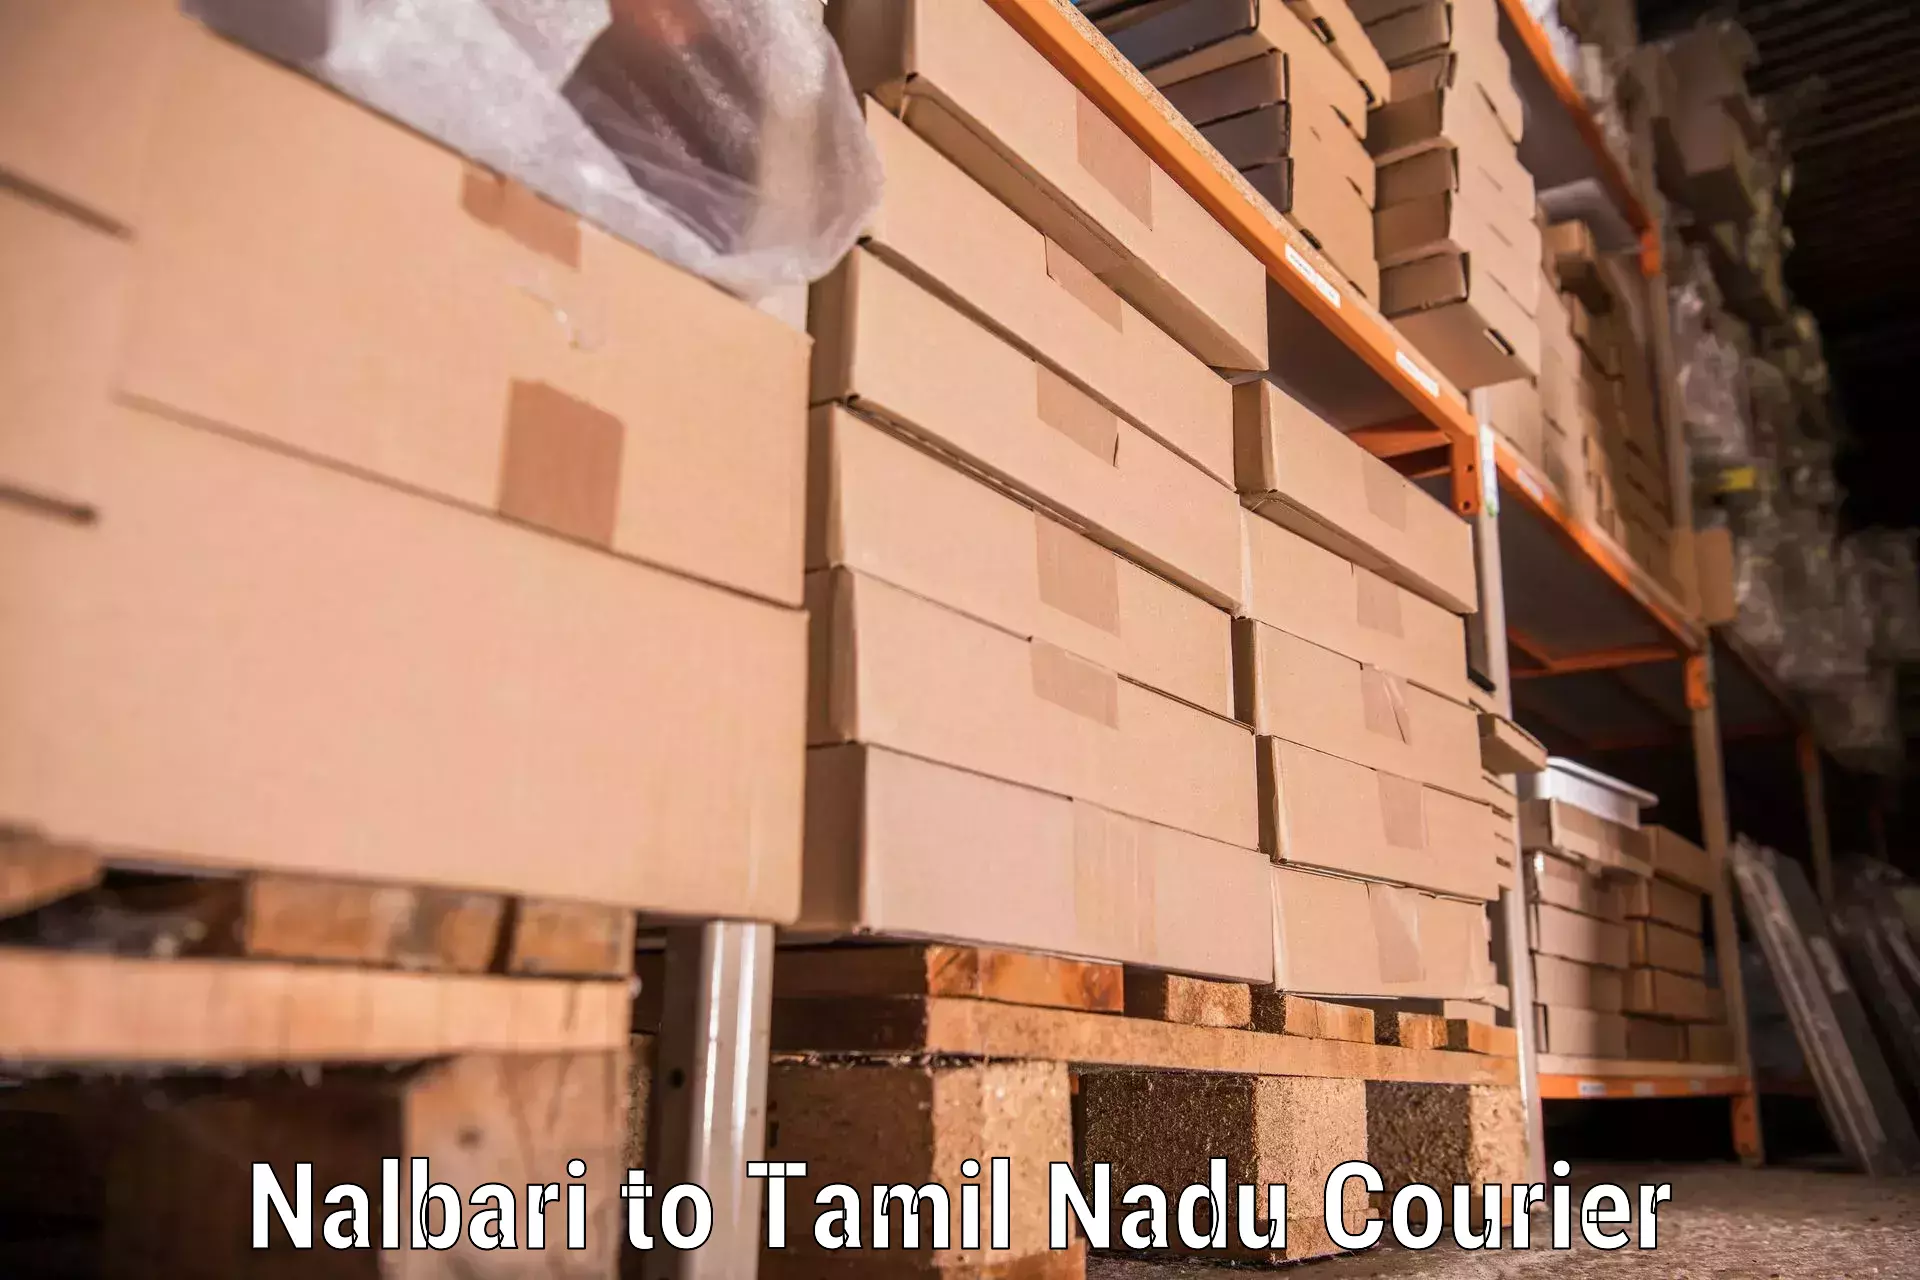 Efficient household movers Nalbari to Thisayanvilai